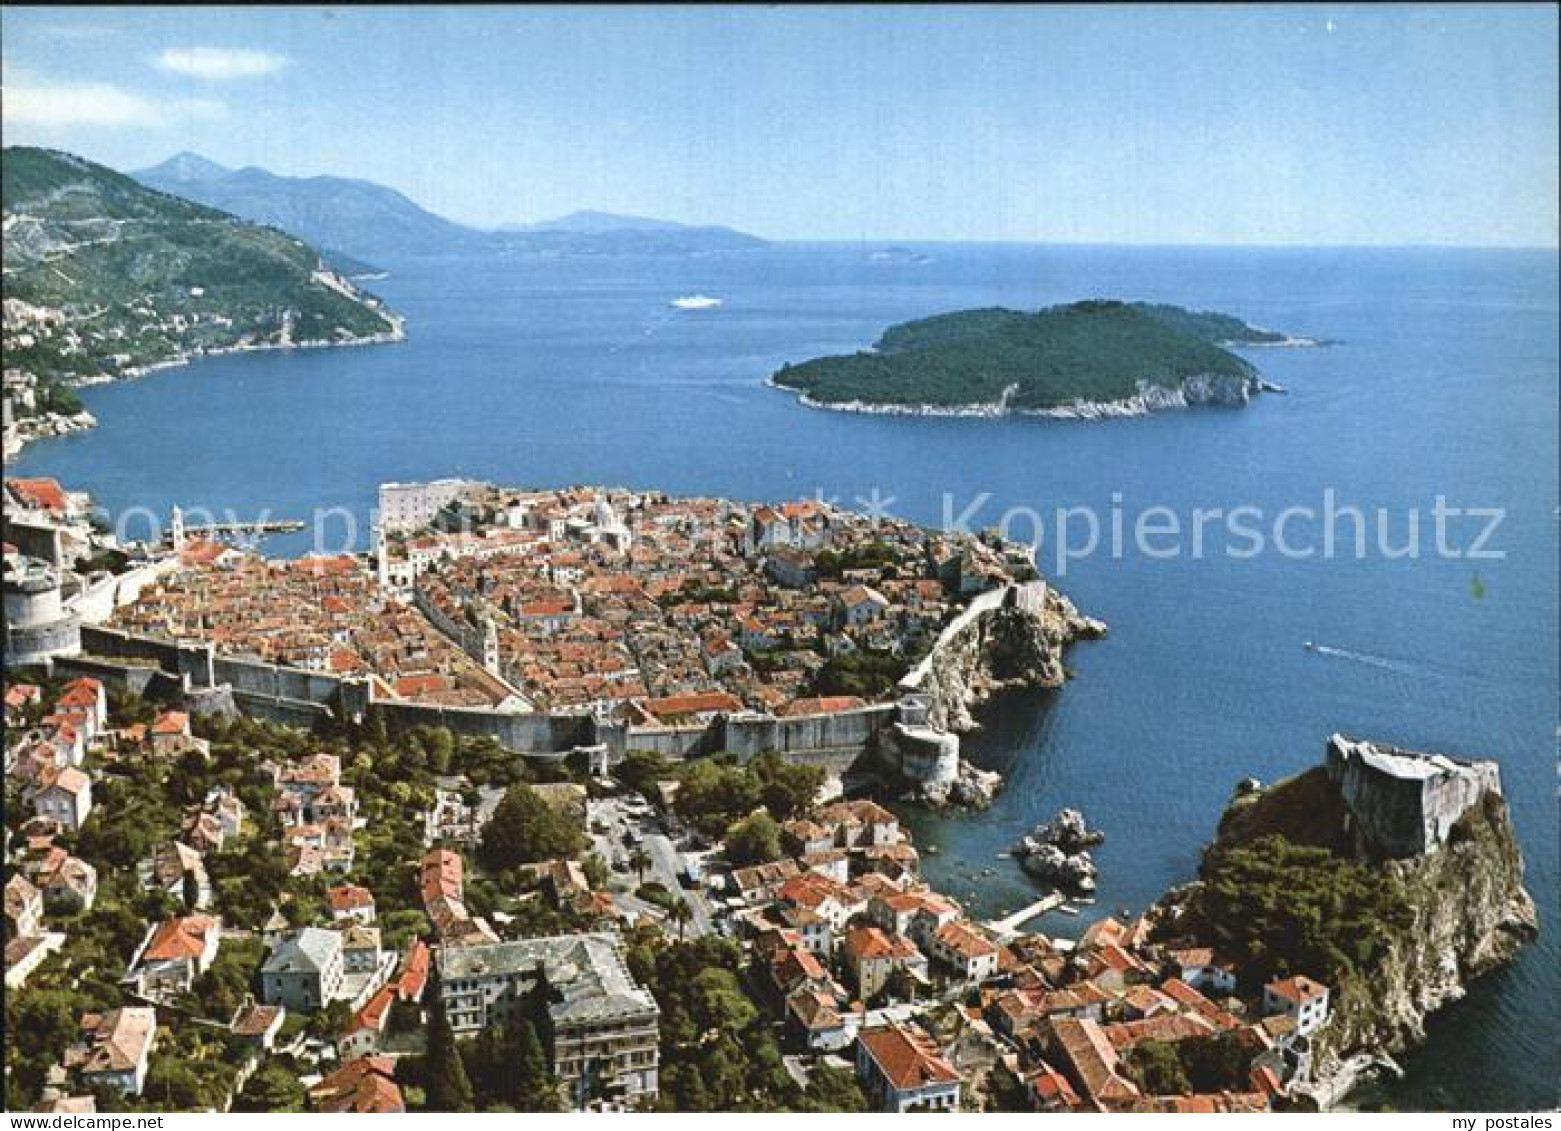 72533287 Dubrovnik Ragusa Fliegeraufnahme  Croatia - Croatie